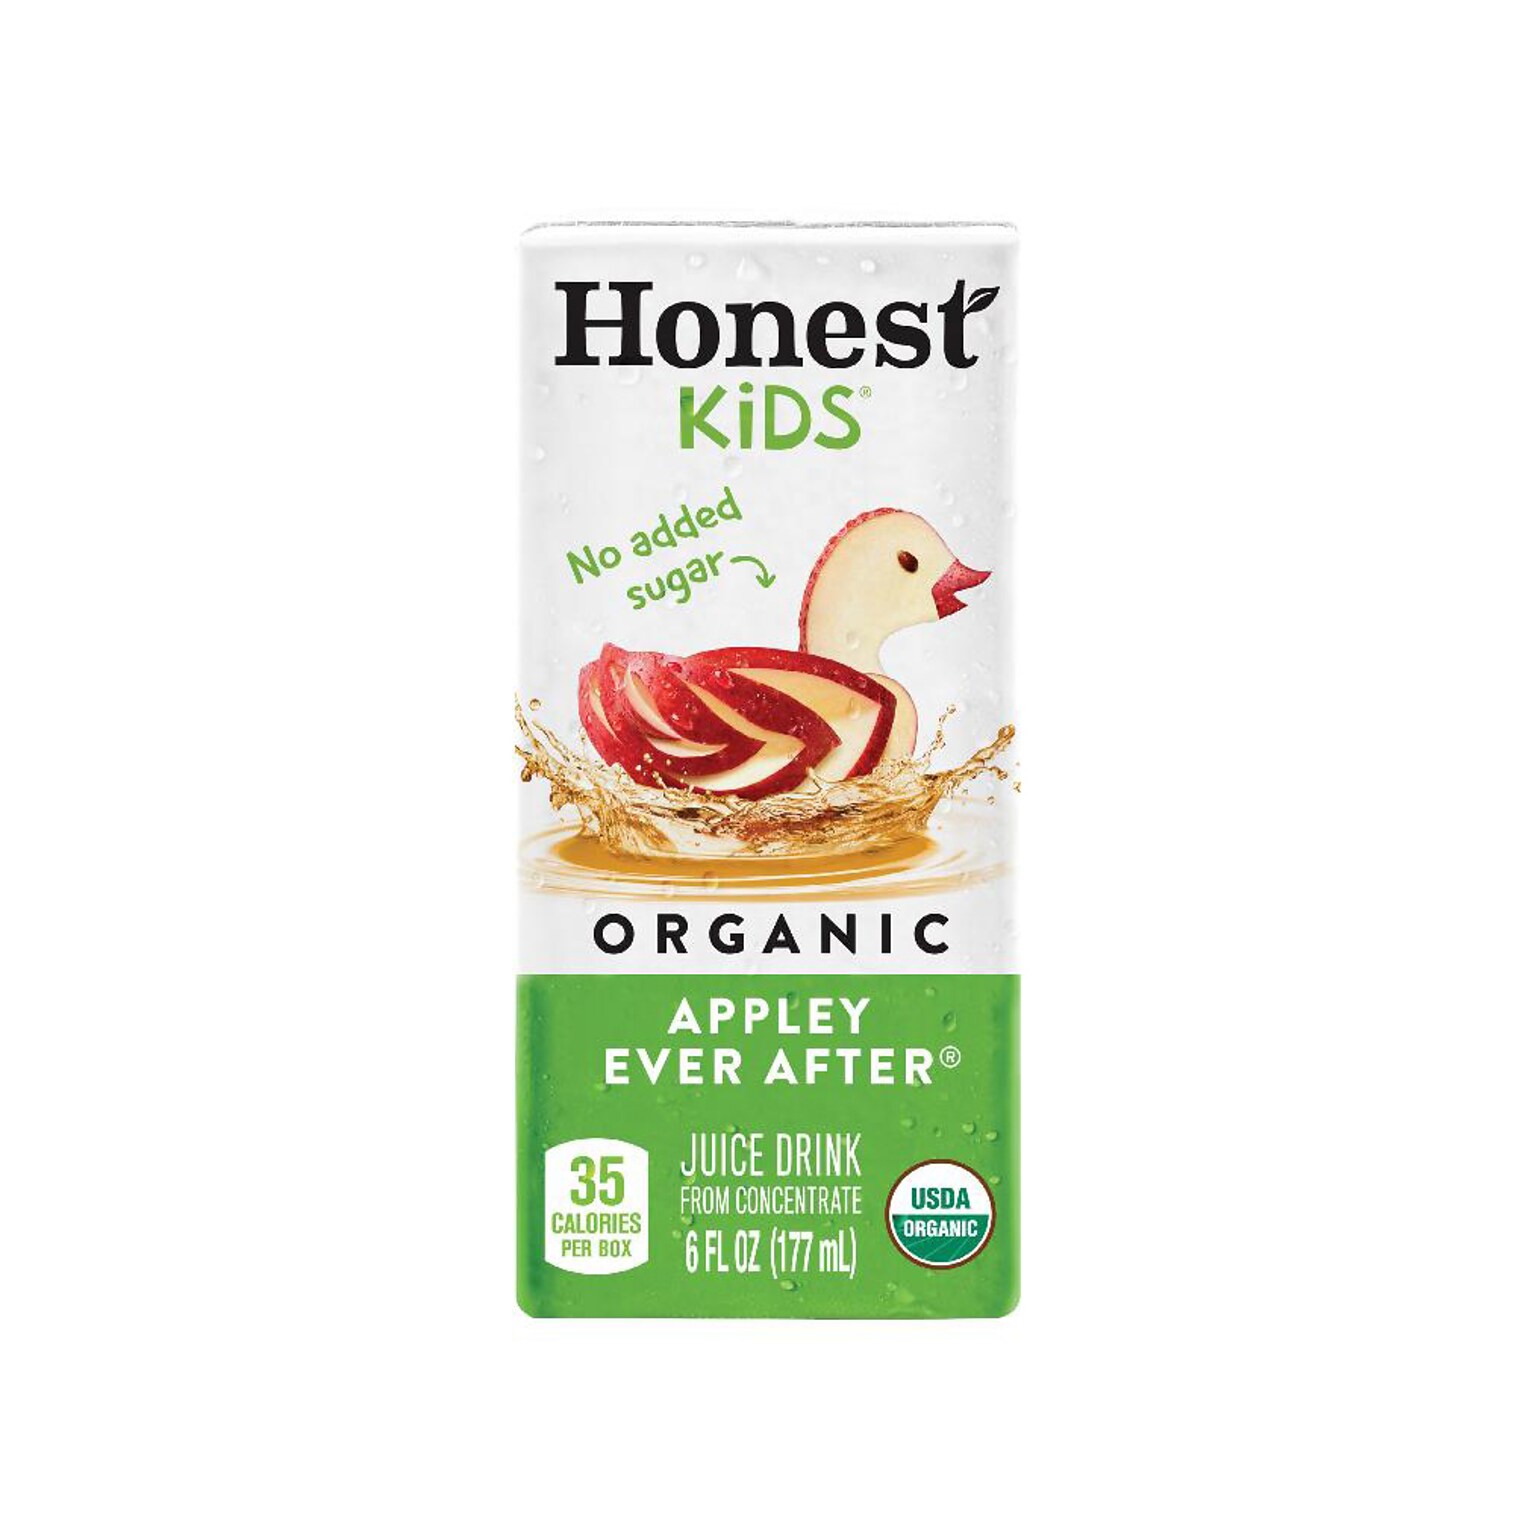 Honest Kids Appley Ever After Apple Juice Drink, No Sugar Added, 6 oz., 50/Carton (CCU41979)